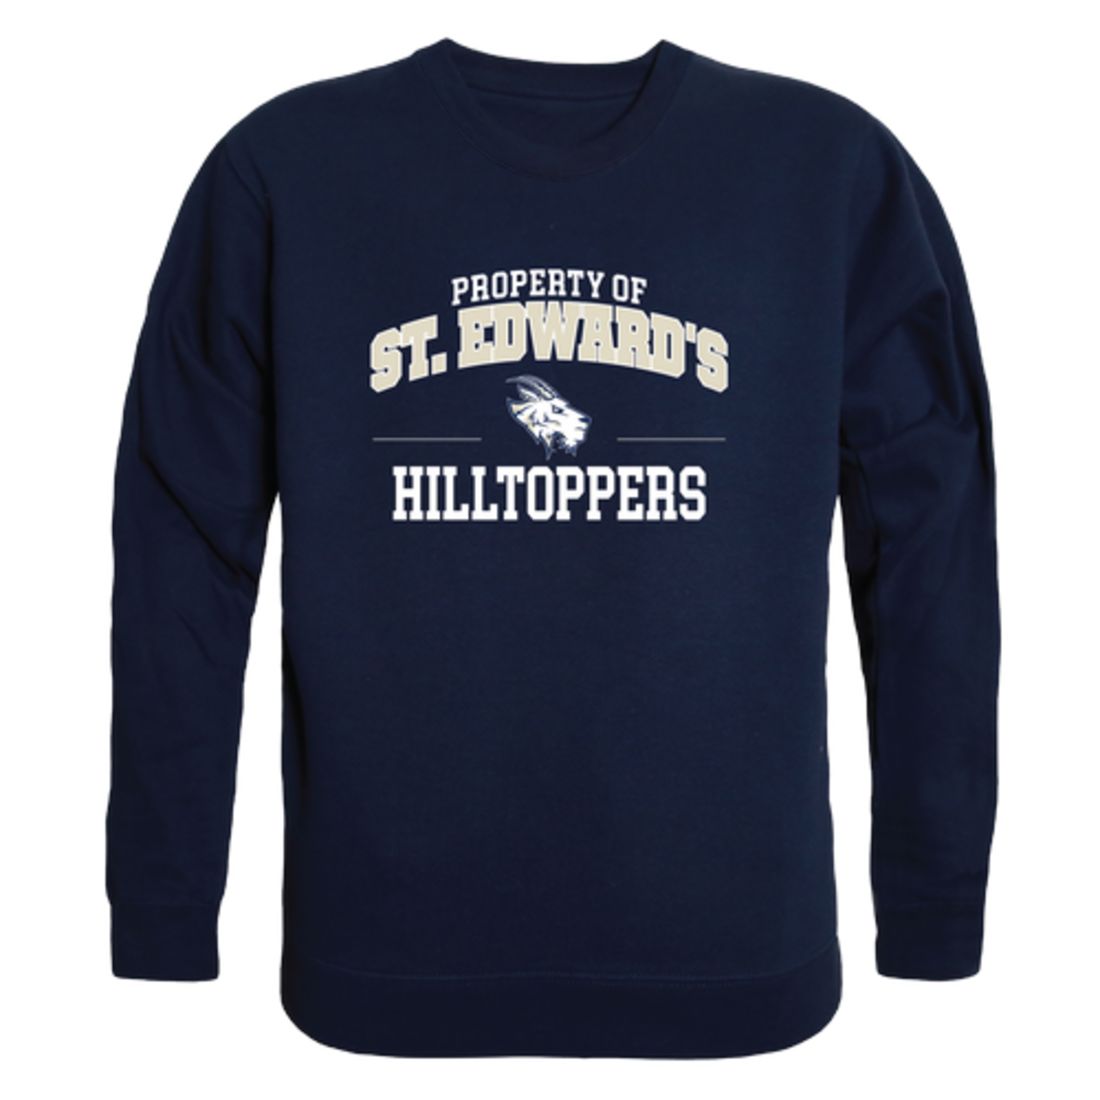 St.-Edward's-University-Hilltoppers-Property-Fleece-Crewneck-Pullover-Sweatshirt